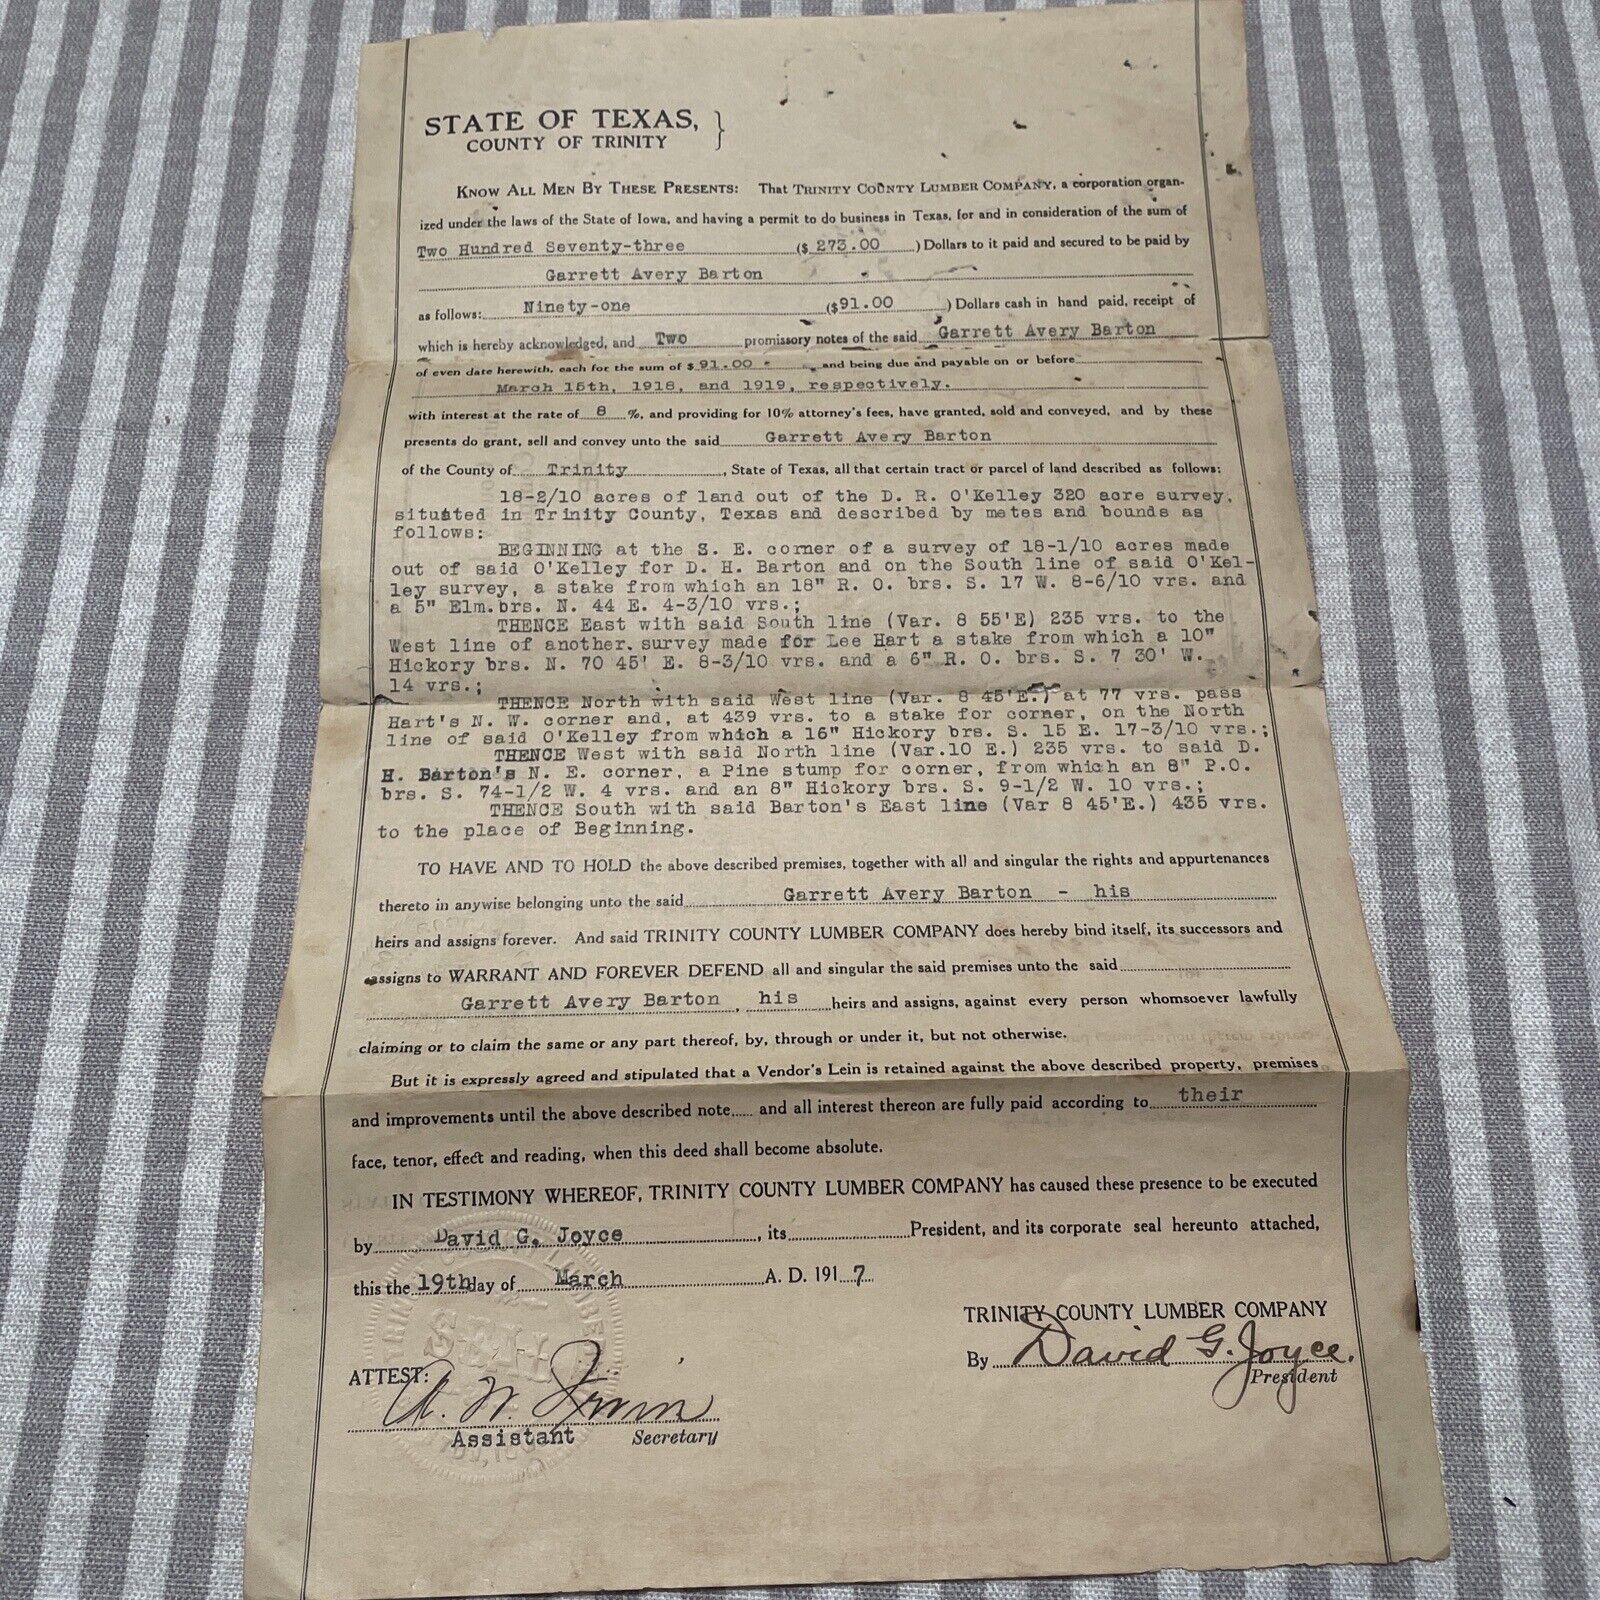 Trinity County Lumber Co Deed Of Sale 1917 signed David G Joyce